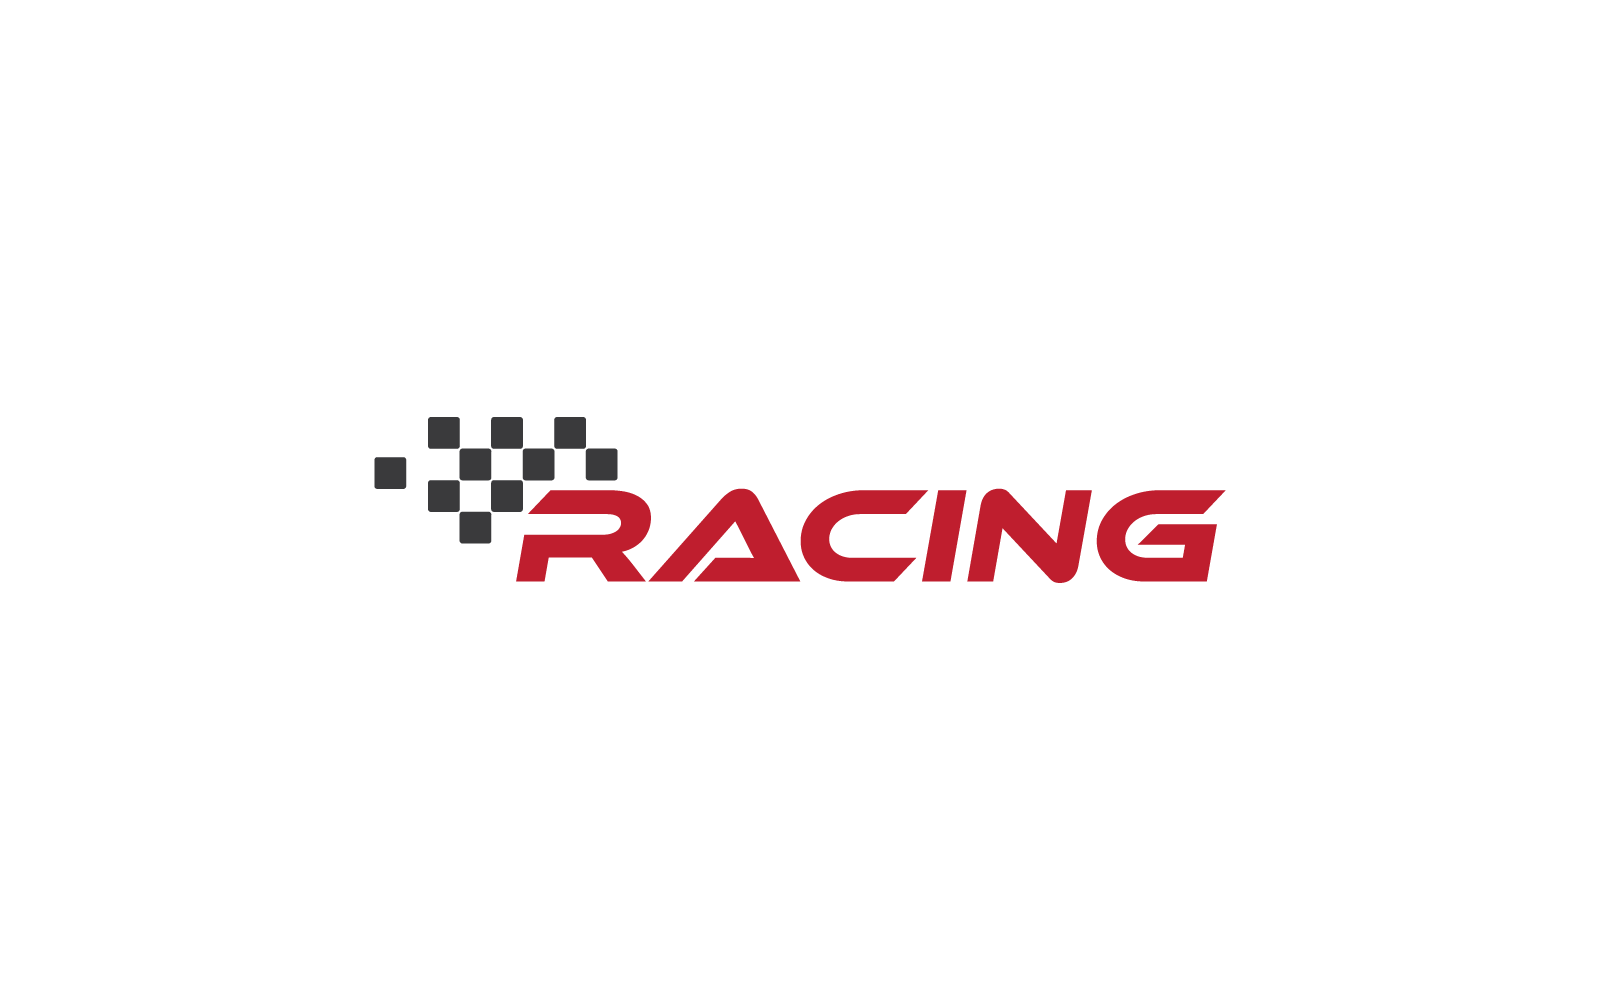 Race flag logo vector design template